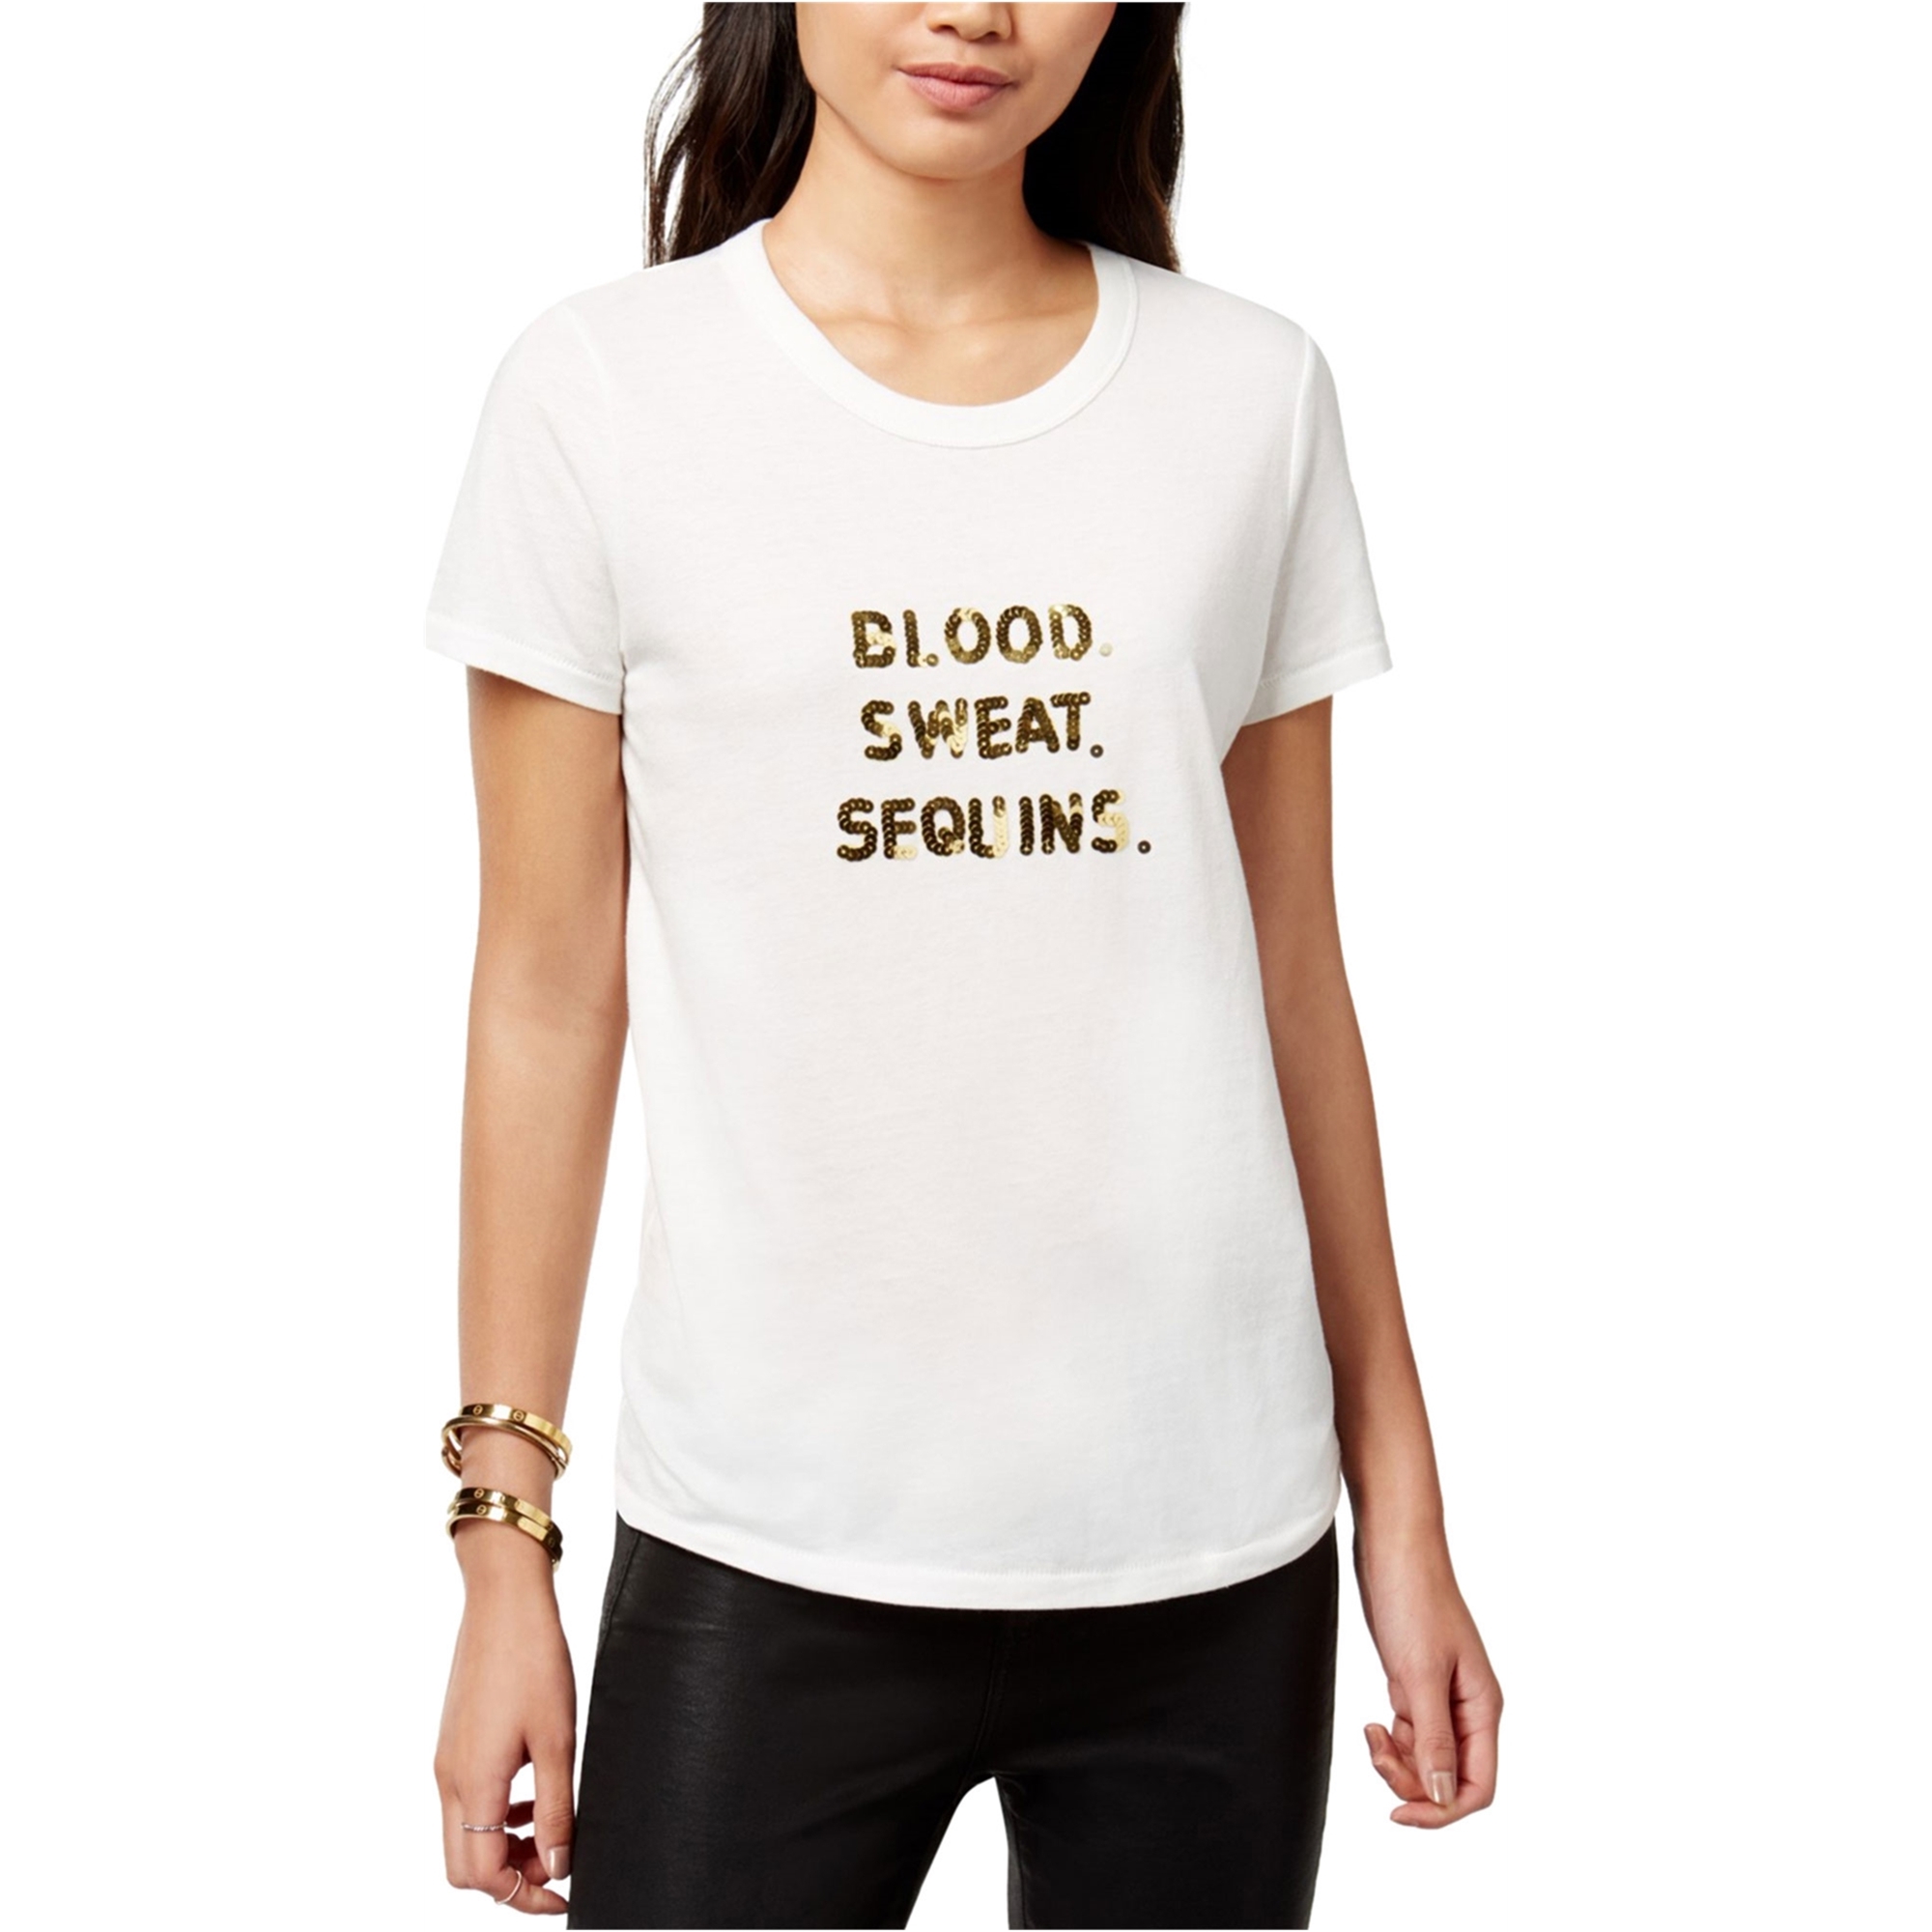 Bow & Drape Womens Sequin Graphic T-Shirt, White, Medium - image 1 of 2